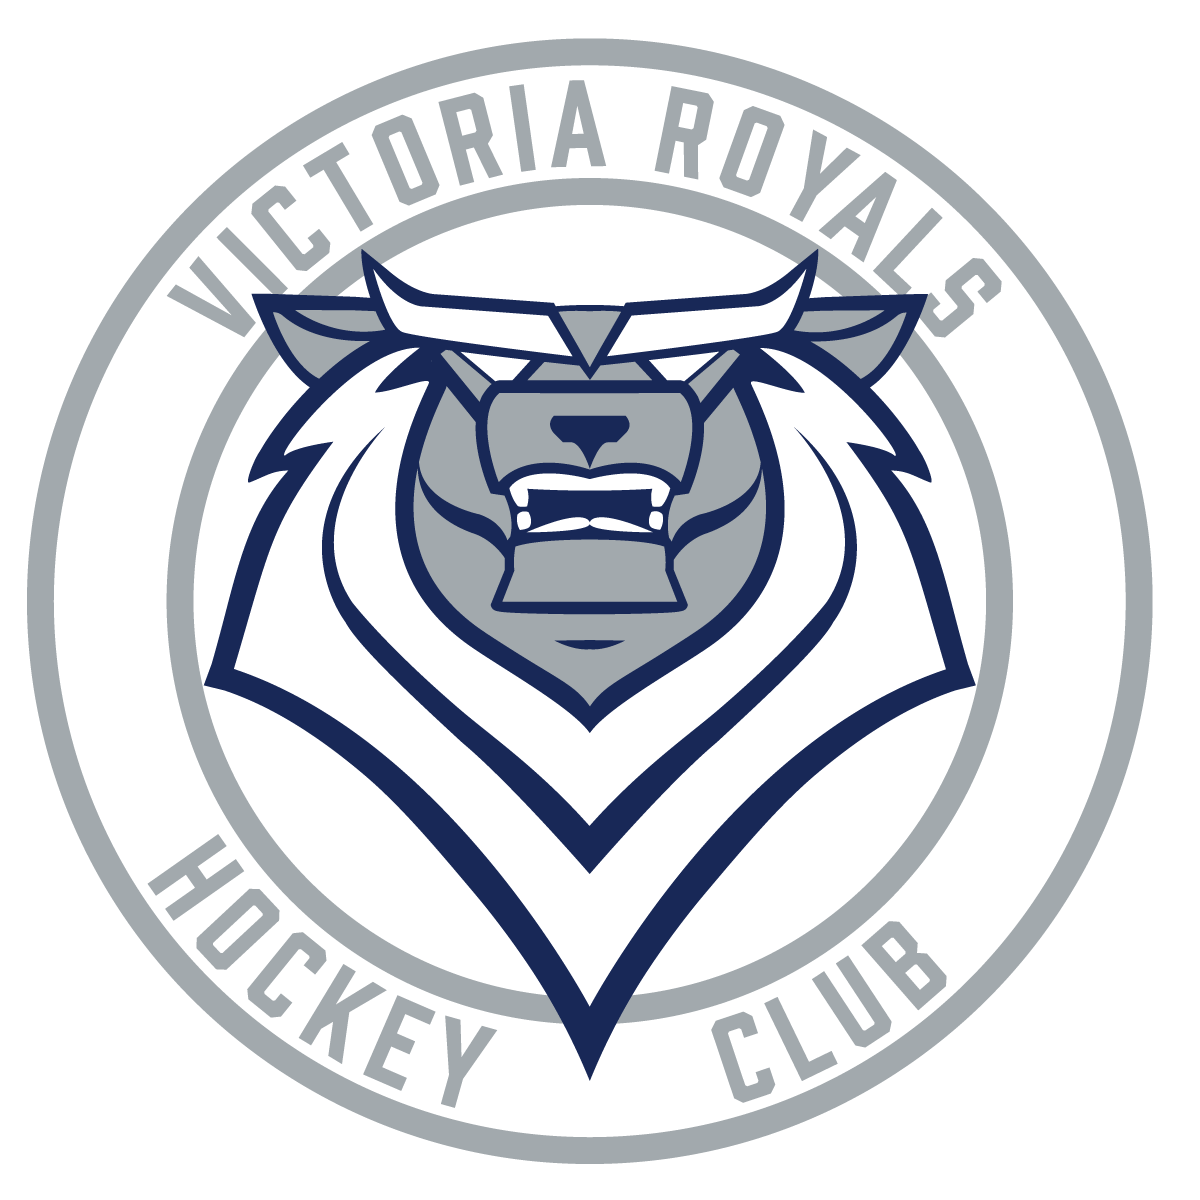 Best dressed under, and - Victoria Royals Hockey Club